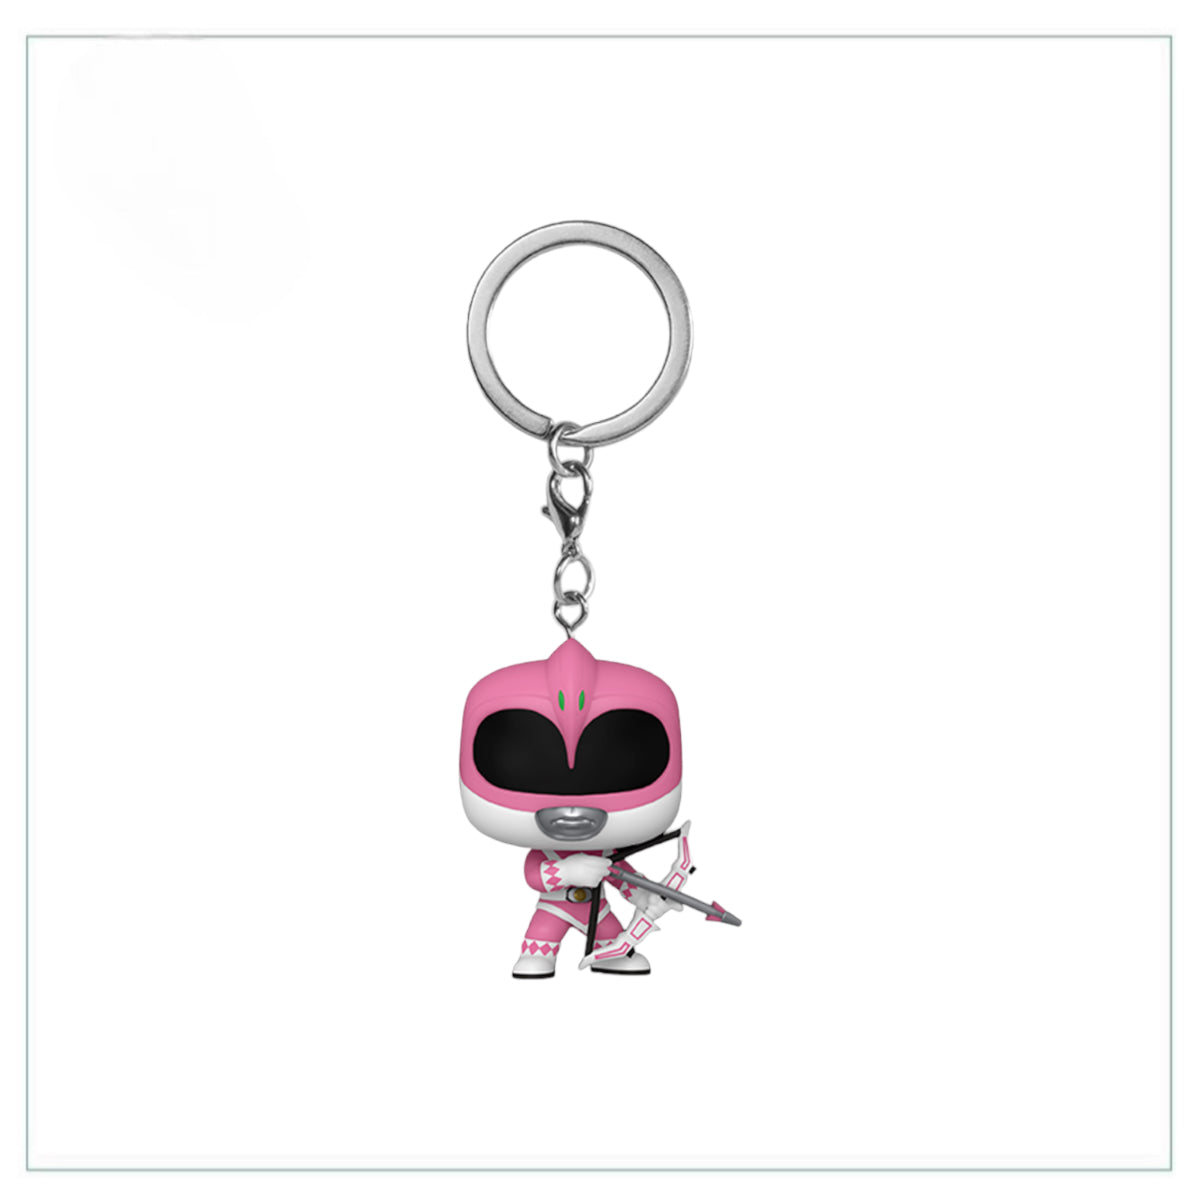 Pink Ranger Funko Pocket Pop Keychain! - Power Rangers